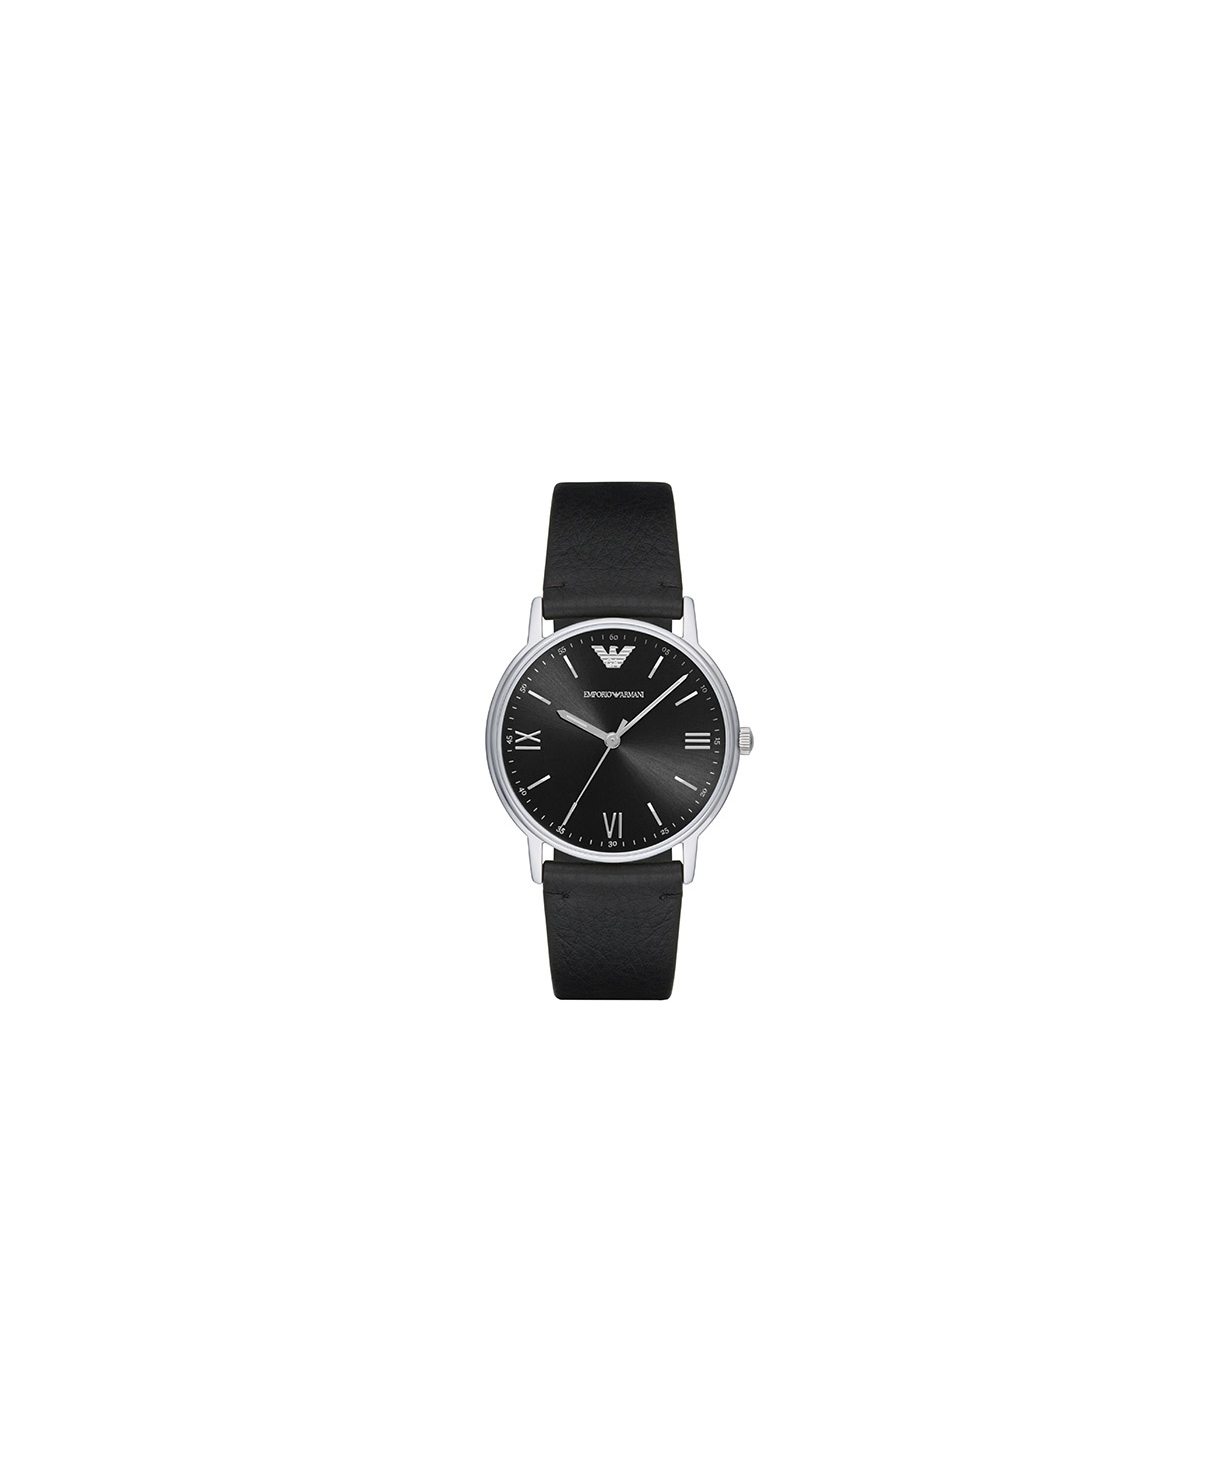 Ժամացույց  «Emporio Armani» ձեռքի  AR11013